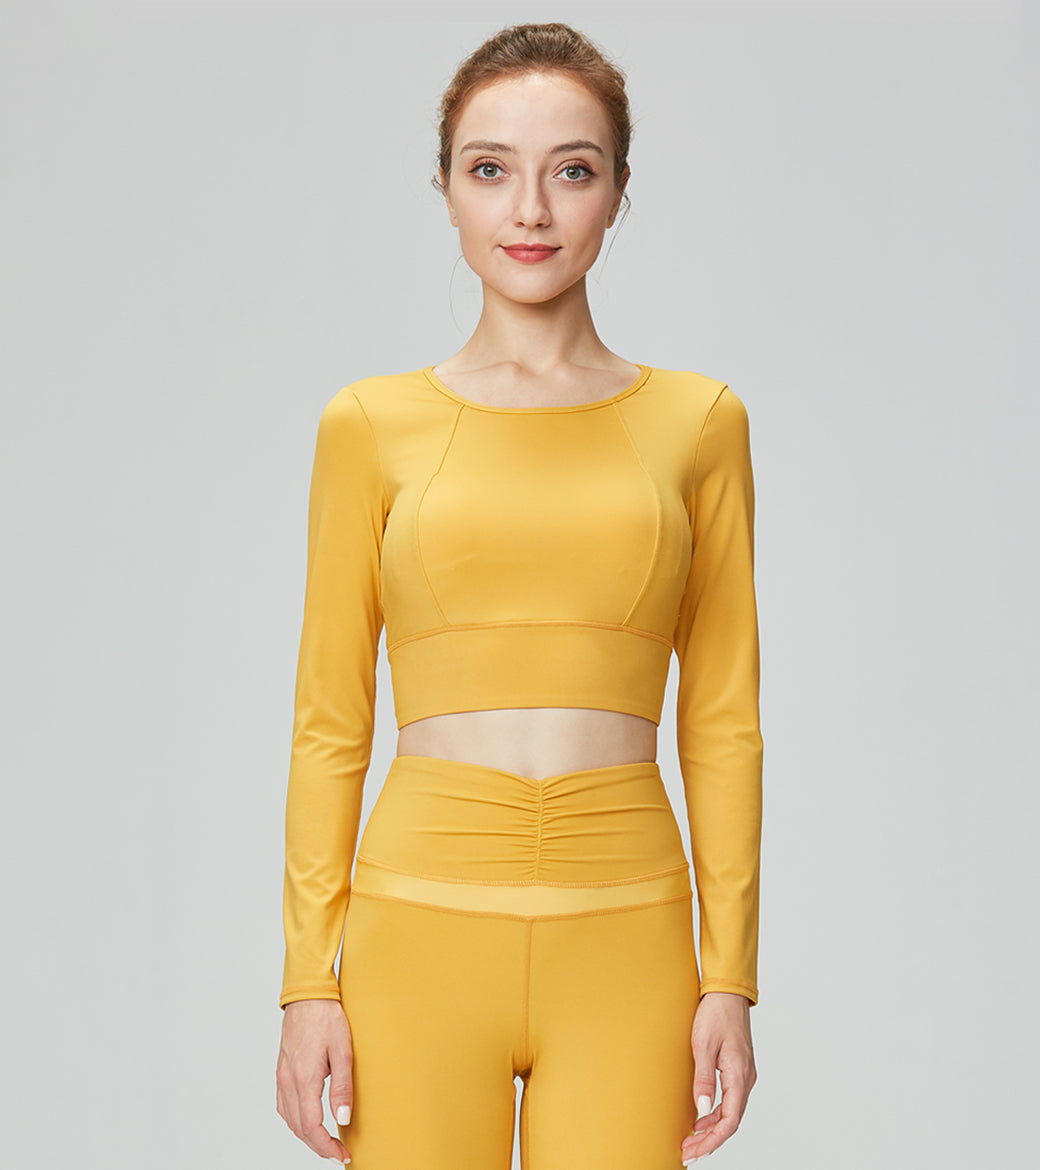 LOVESOFT Women Yoga Casual Slim Fit Long Sleeve Shirts-Yellow